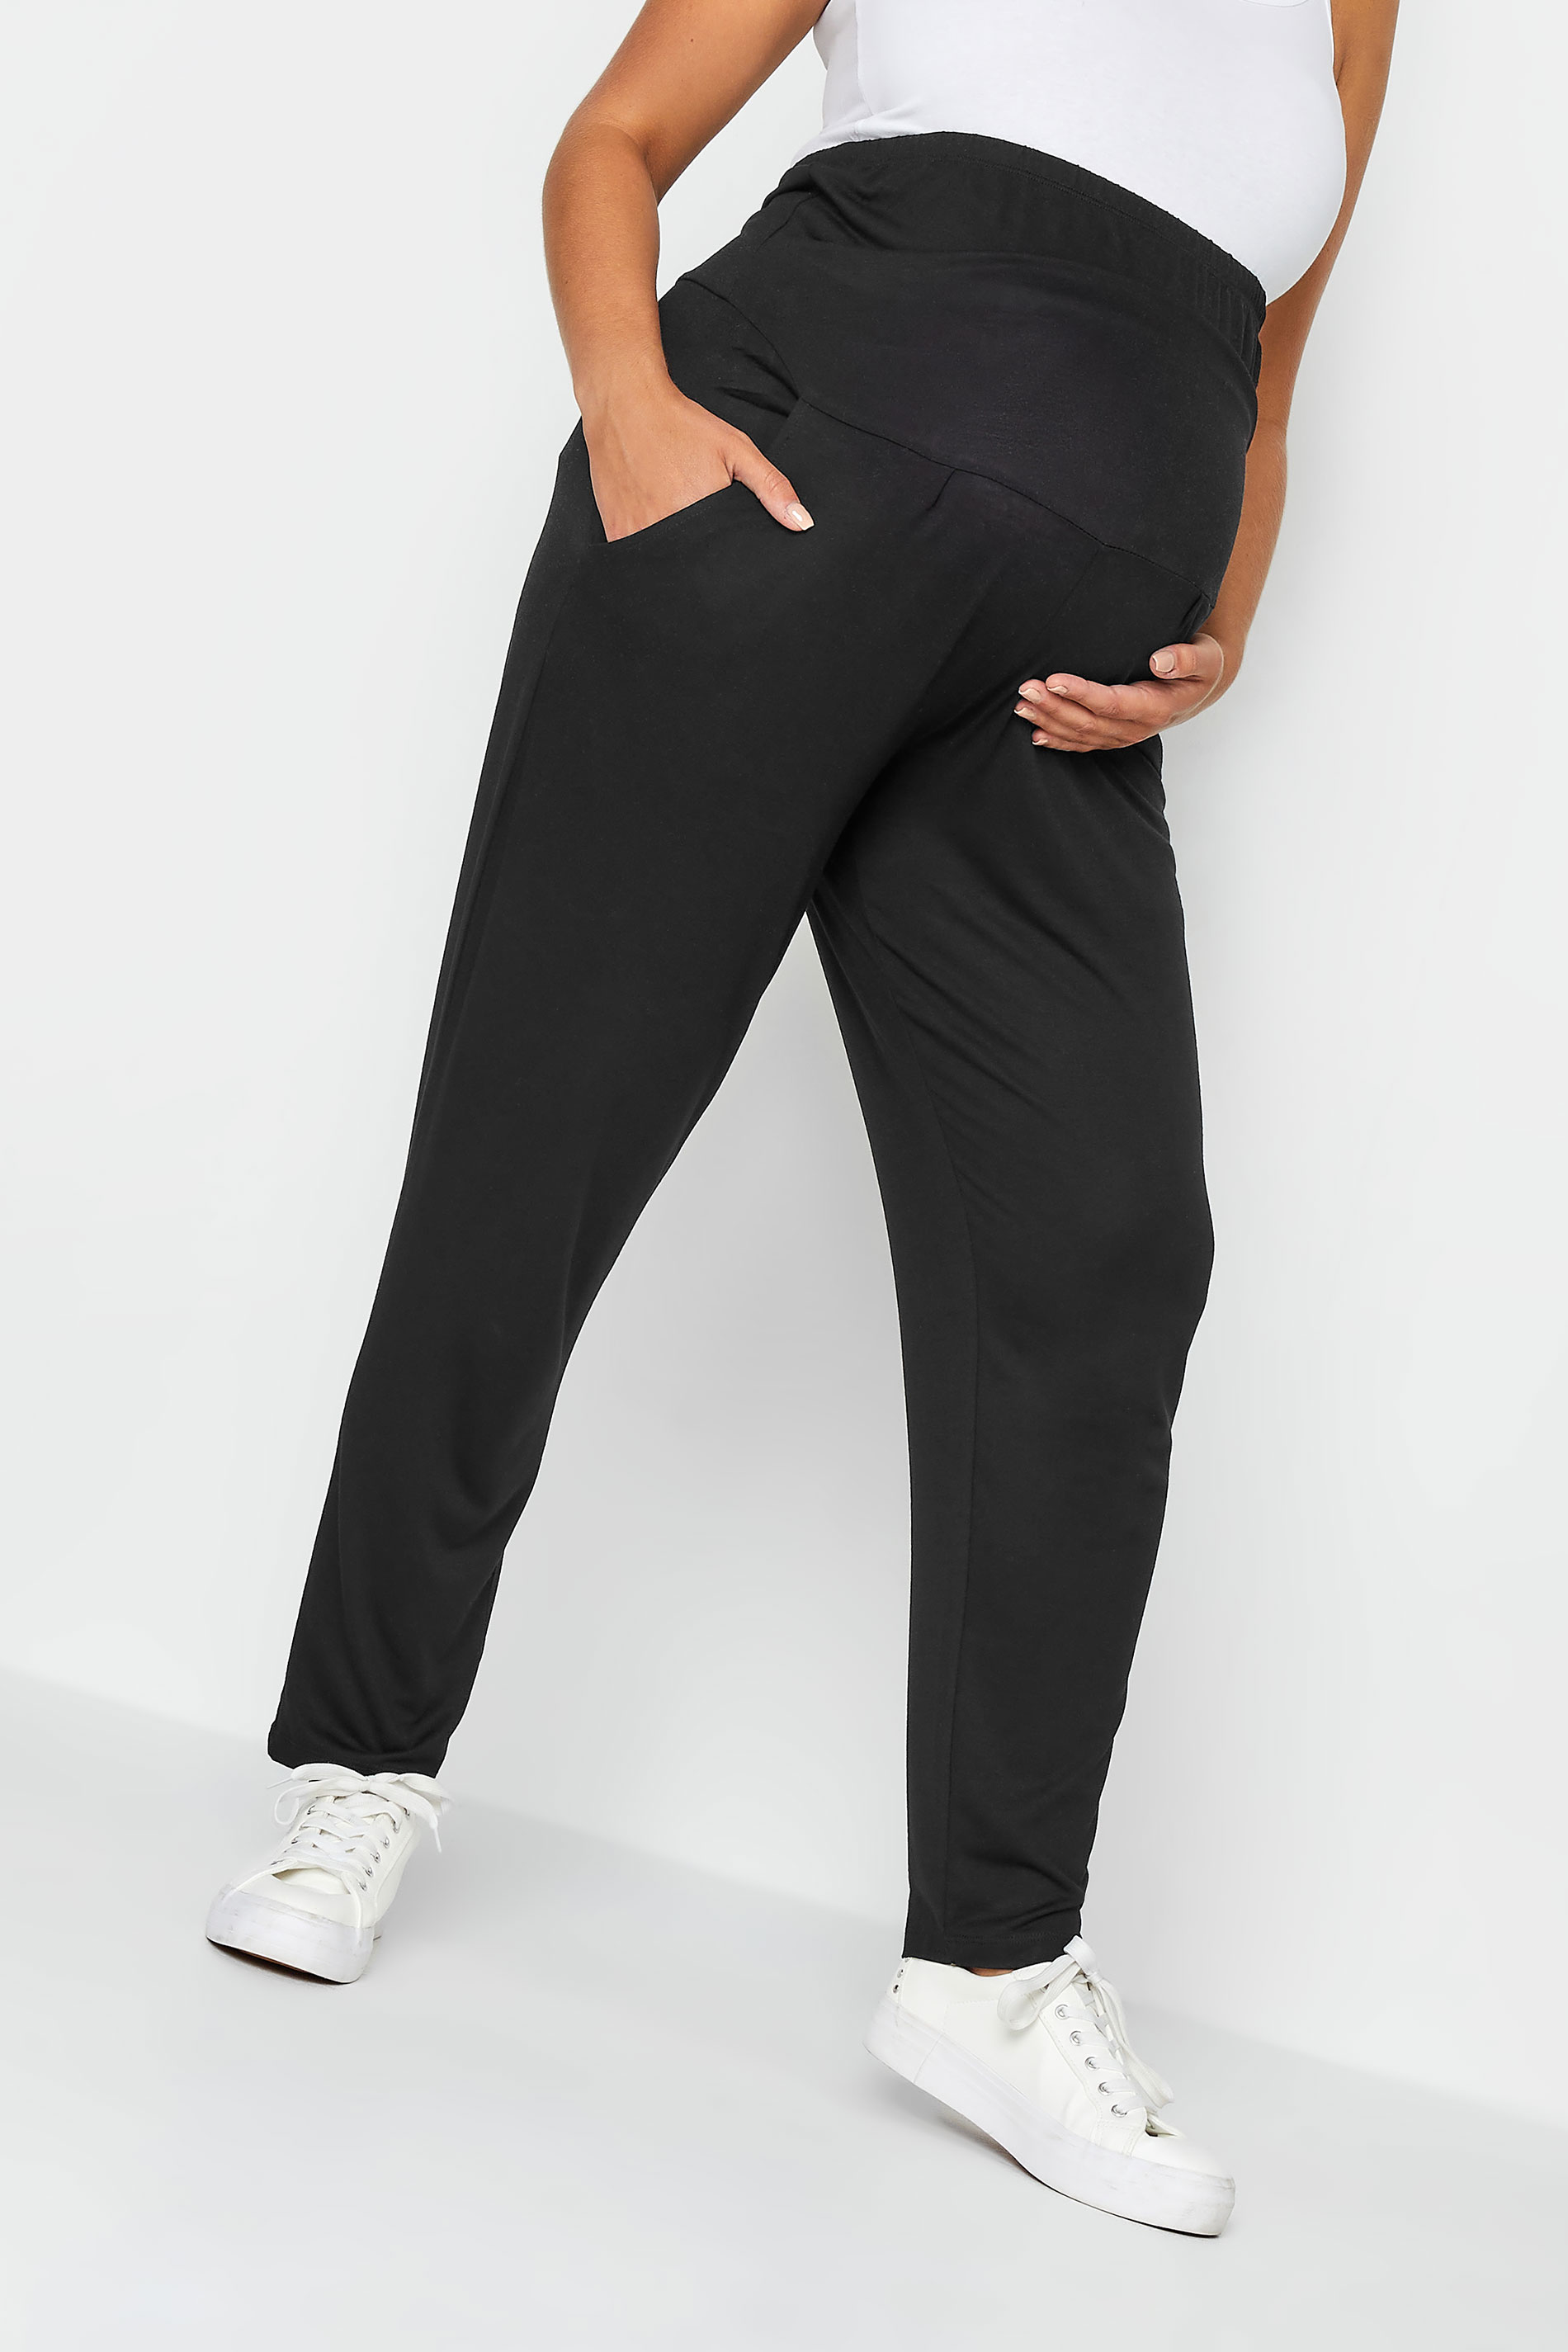 BUMP IT UP MATERNITY Curve Plus Size Black Harem Trousers | Yours Clothing